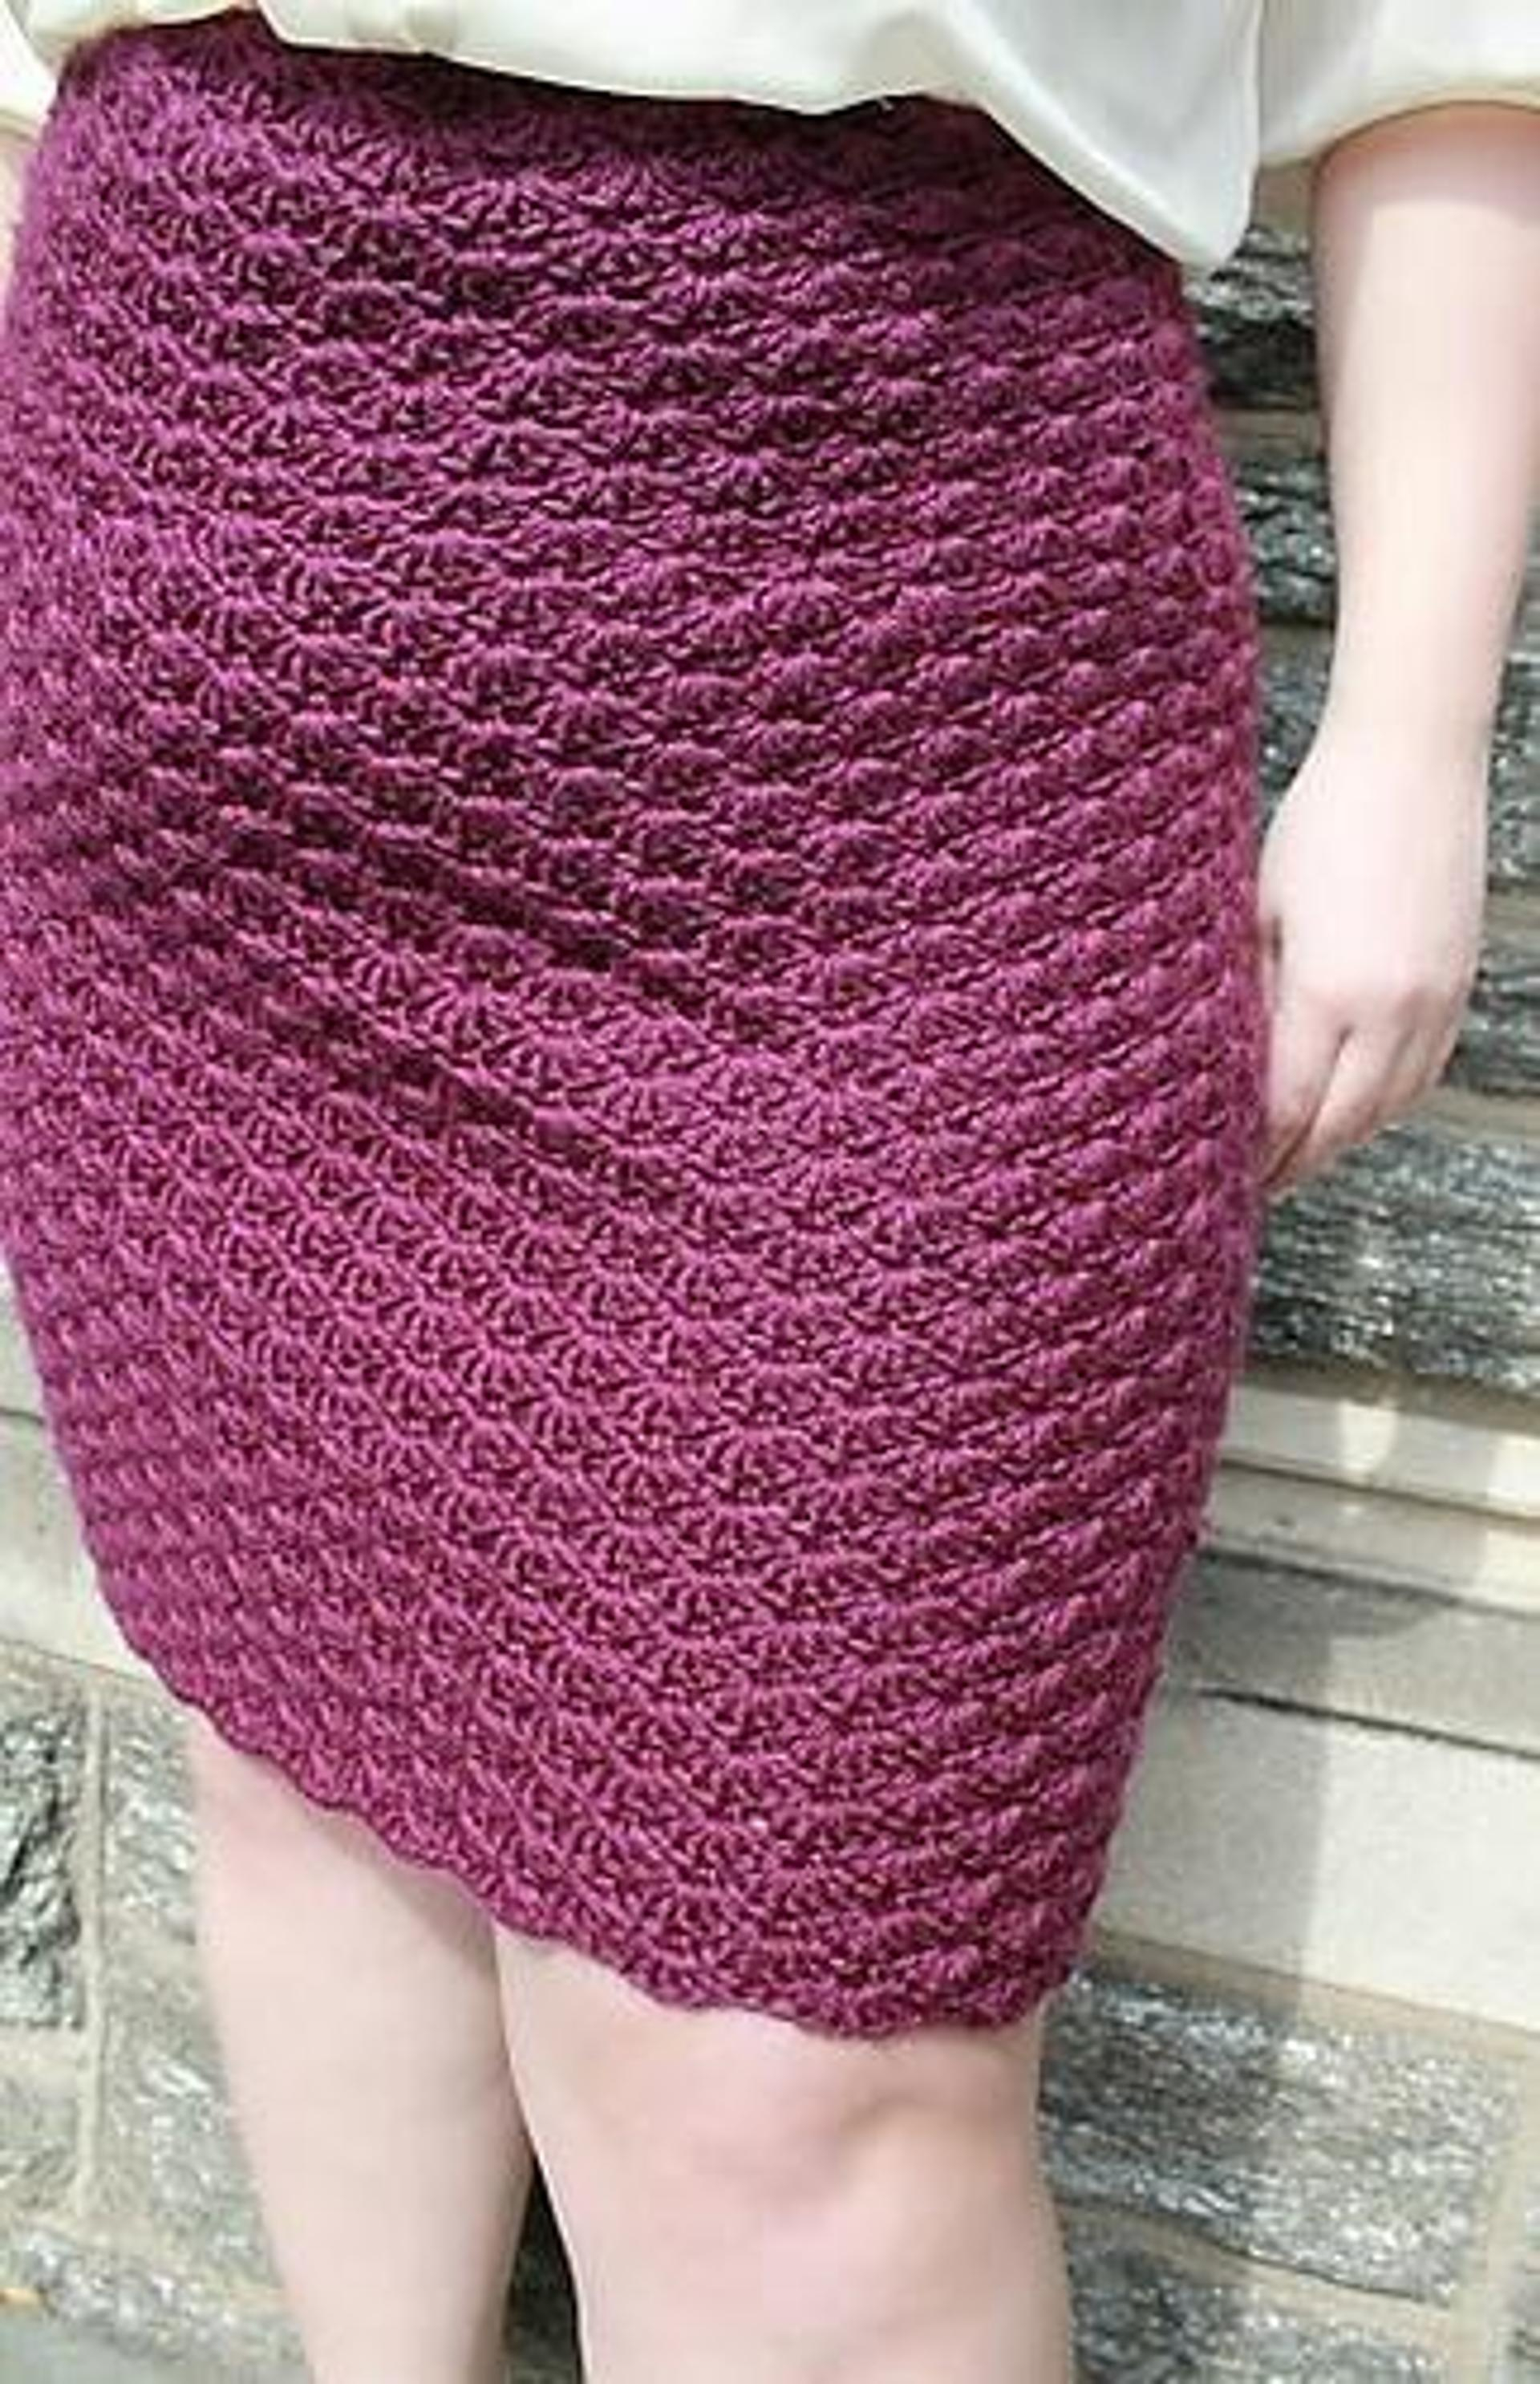 Crochet Shrug Plus Size Pattern The 10 Best Plus Size Crochet Patterns